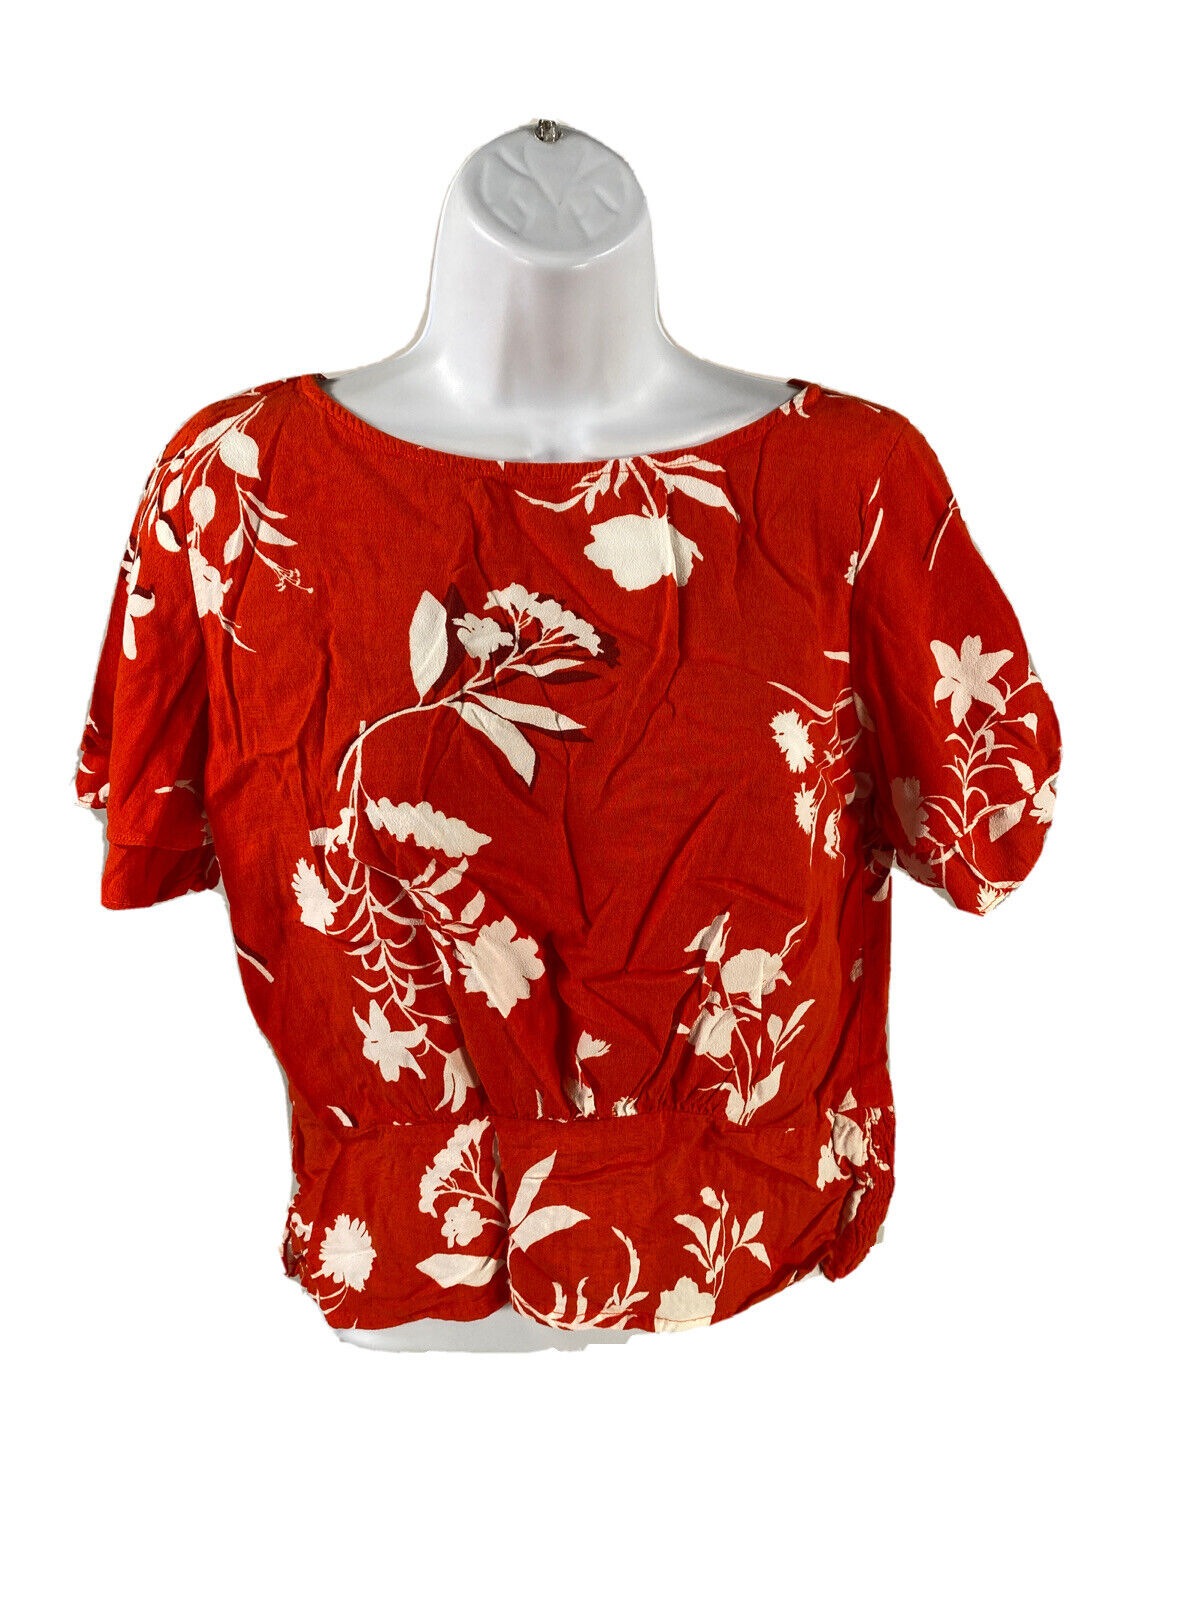 Ann Taylor Women's Red Floral Short Sleeve Peplum Blouse - S Petite